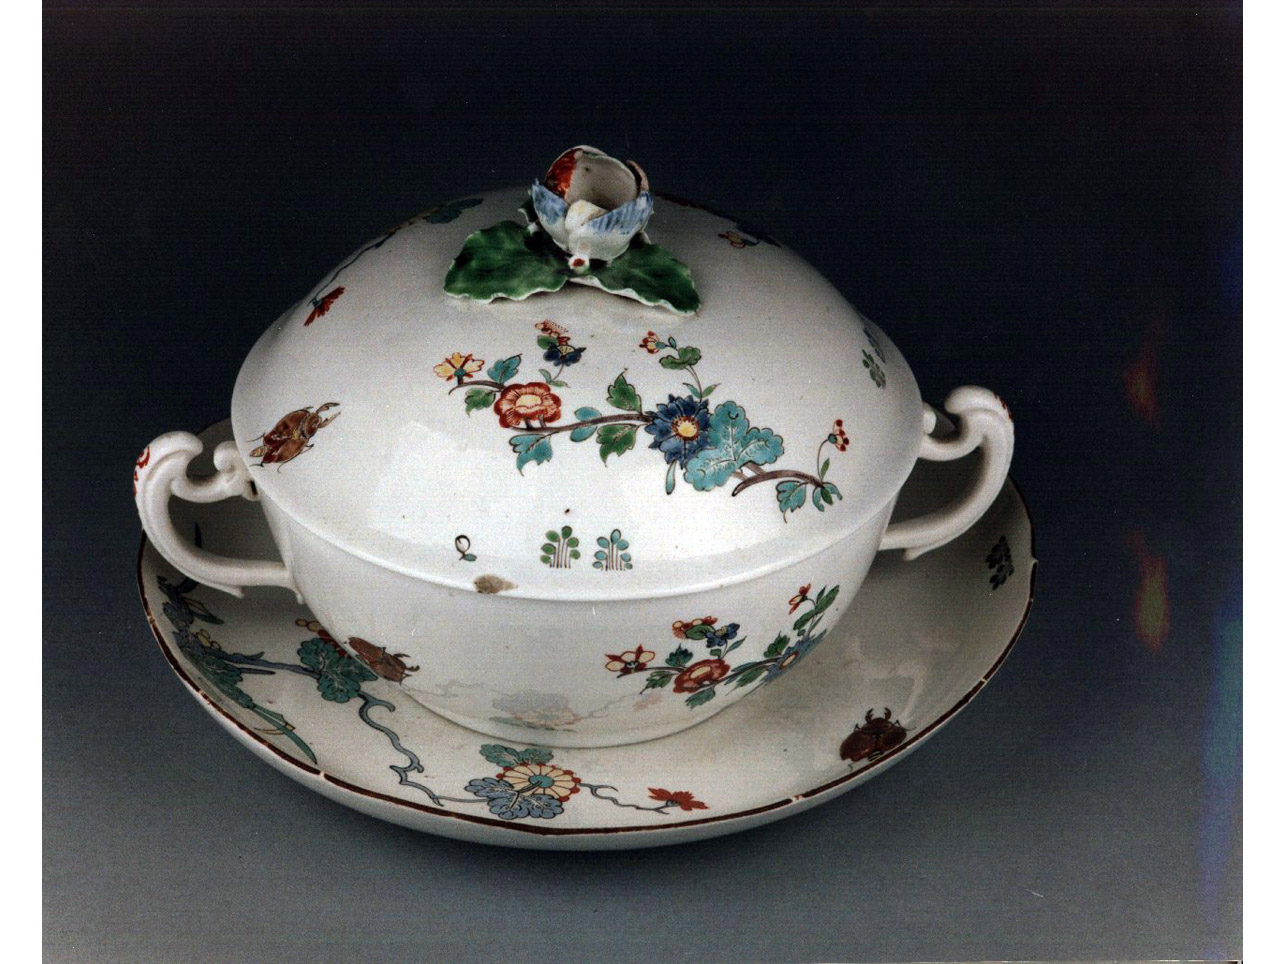 motivi decorativi floreali (tazza puerperale) - produzione di Chantilly (sec. XVIII)